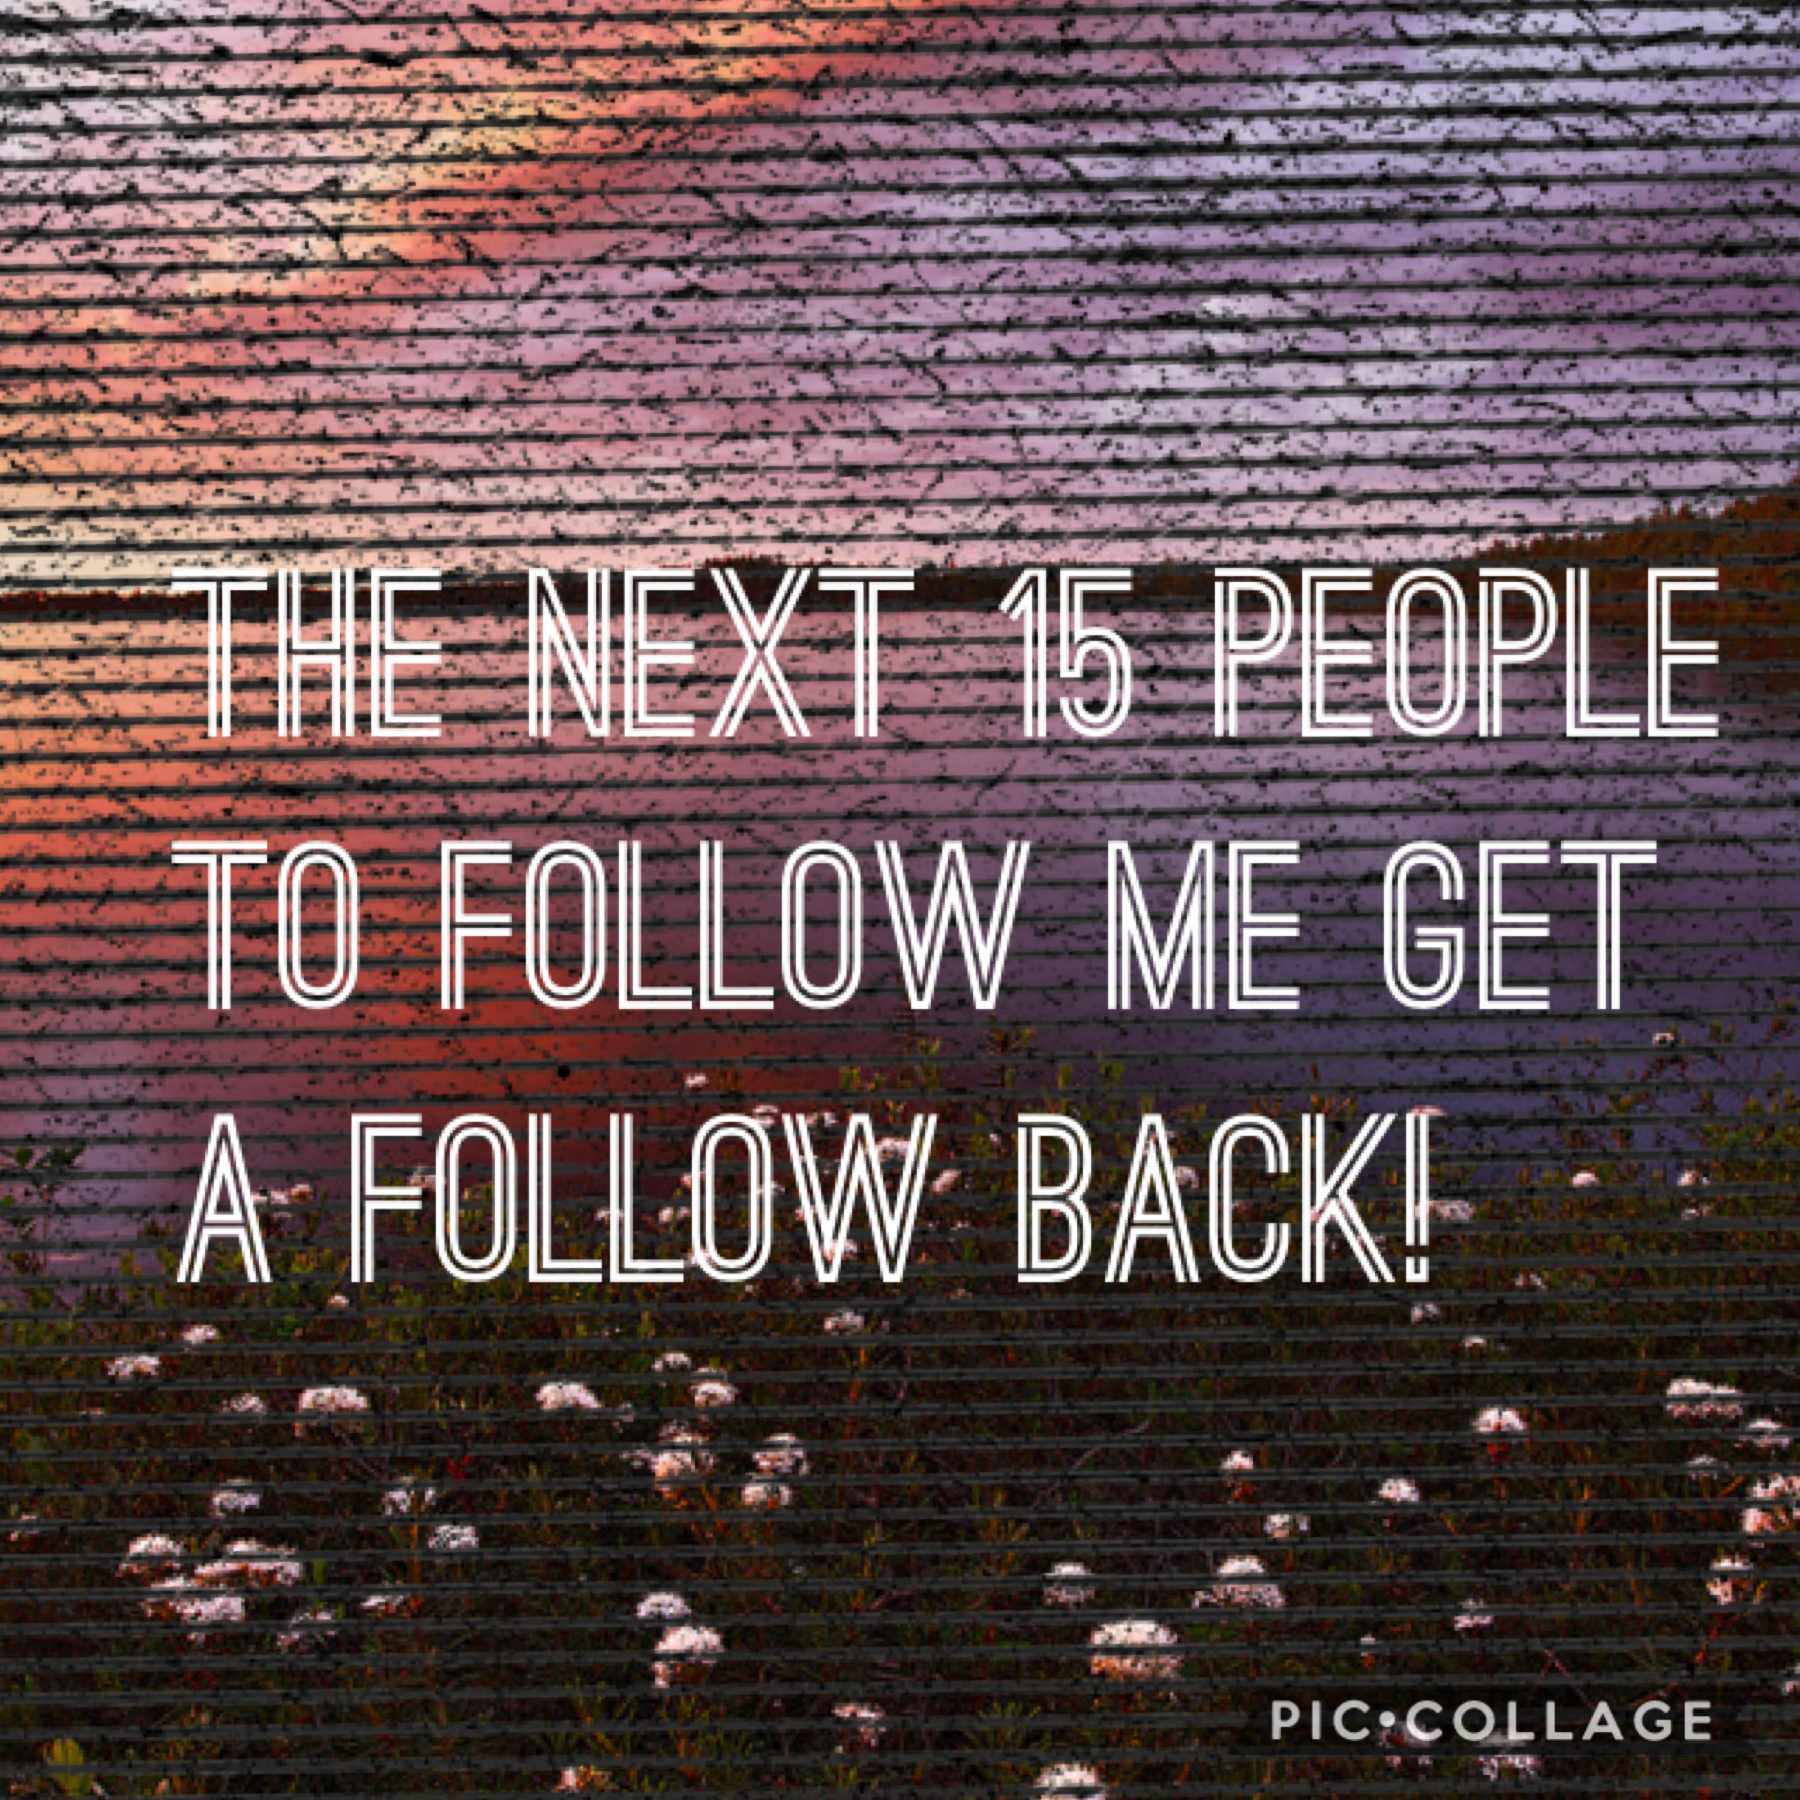 🌙Tap🌙

Follow for a follow!